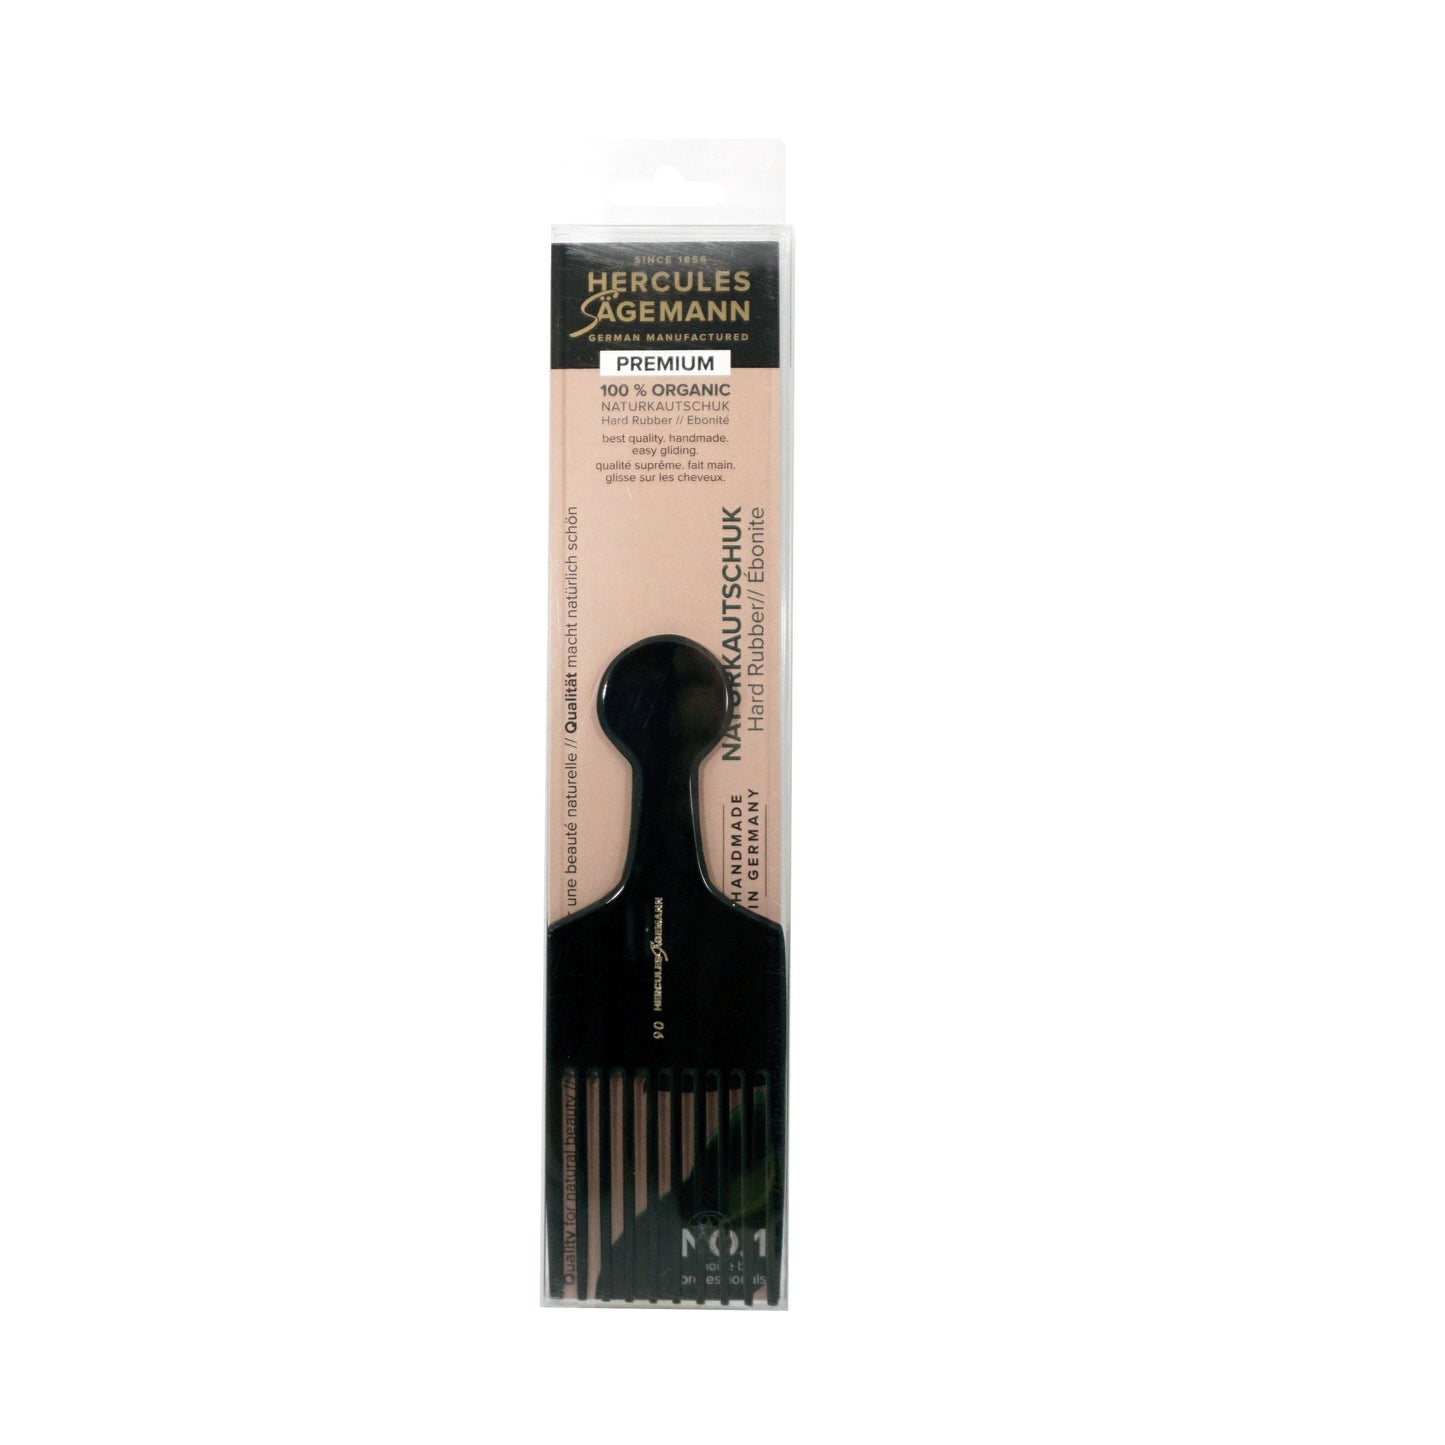 6.75in Hard Rubber Pick Comb, Hercules Sagemann 90